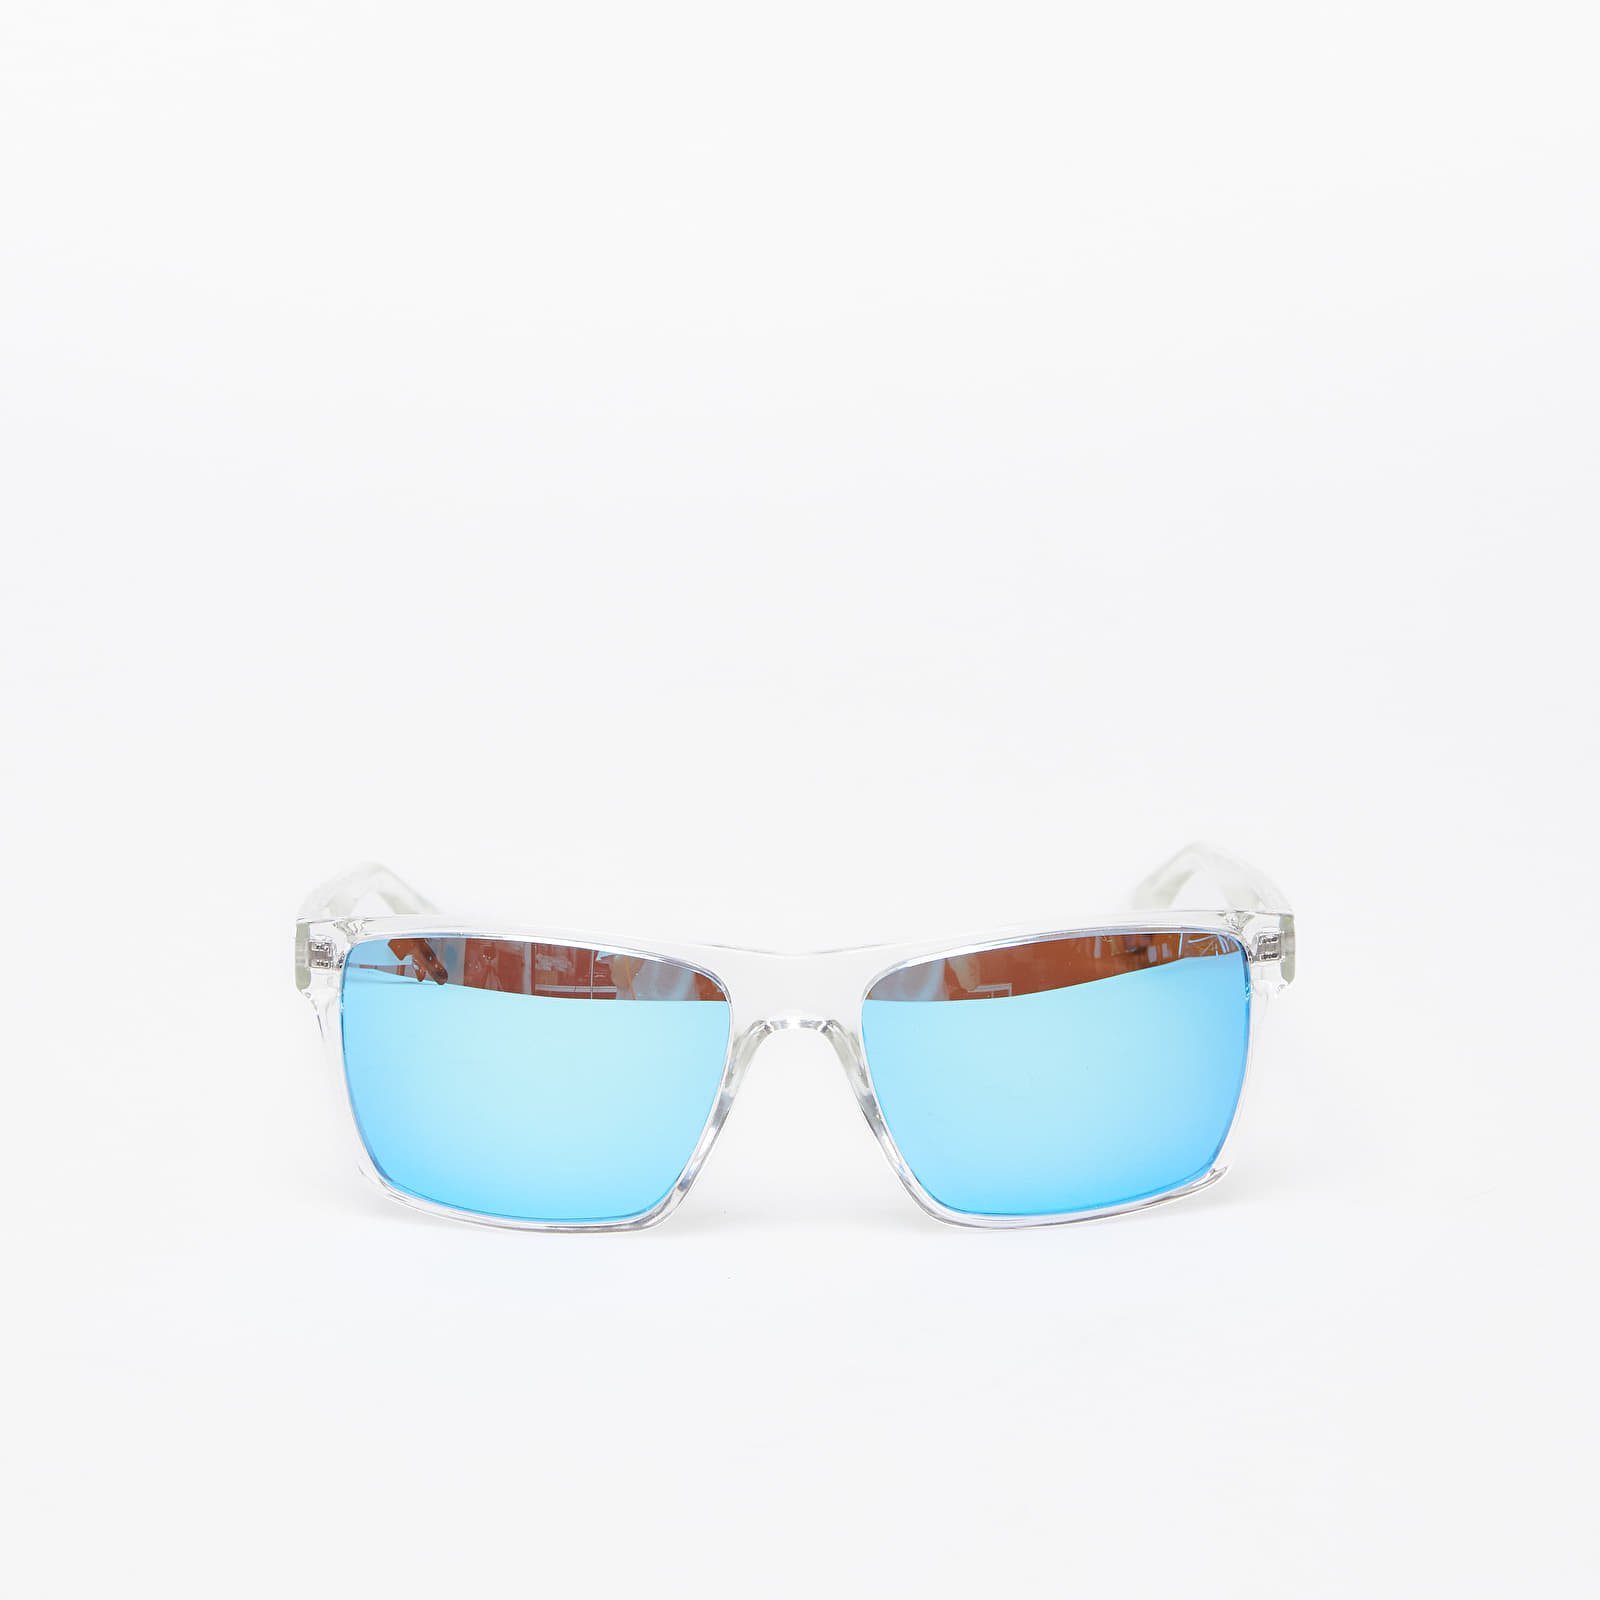 Sunglasses Horsefeathers Merlin Sunglasses Crystal/Mirror Blue